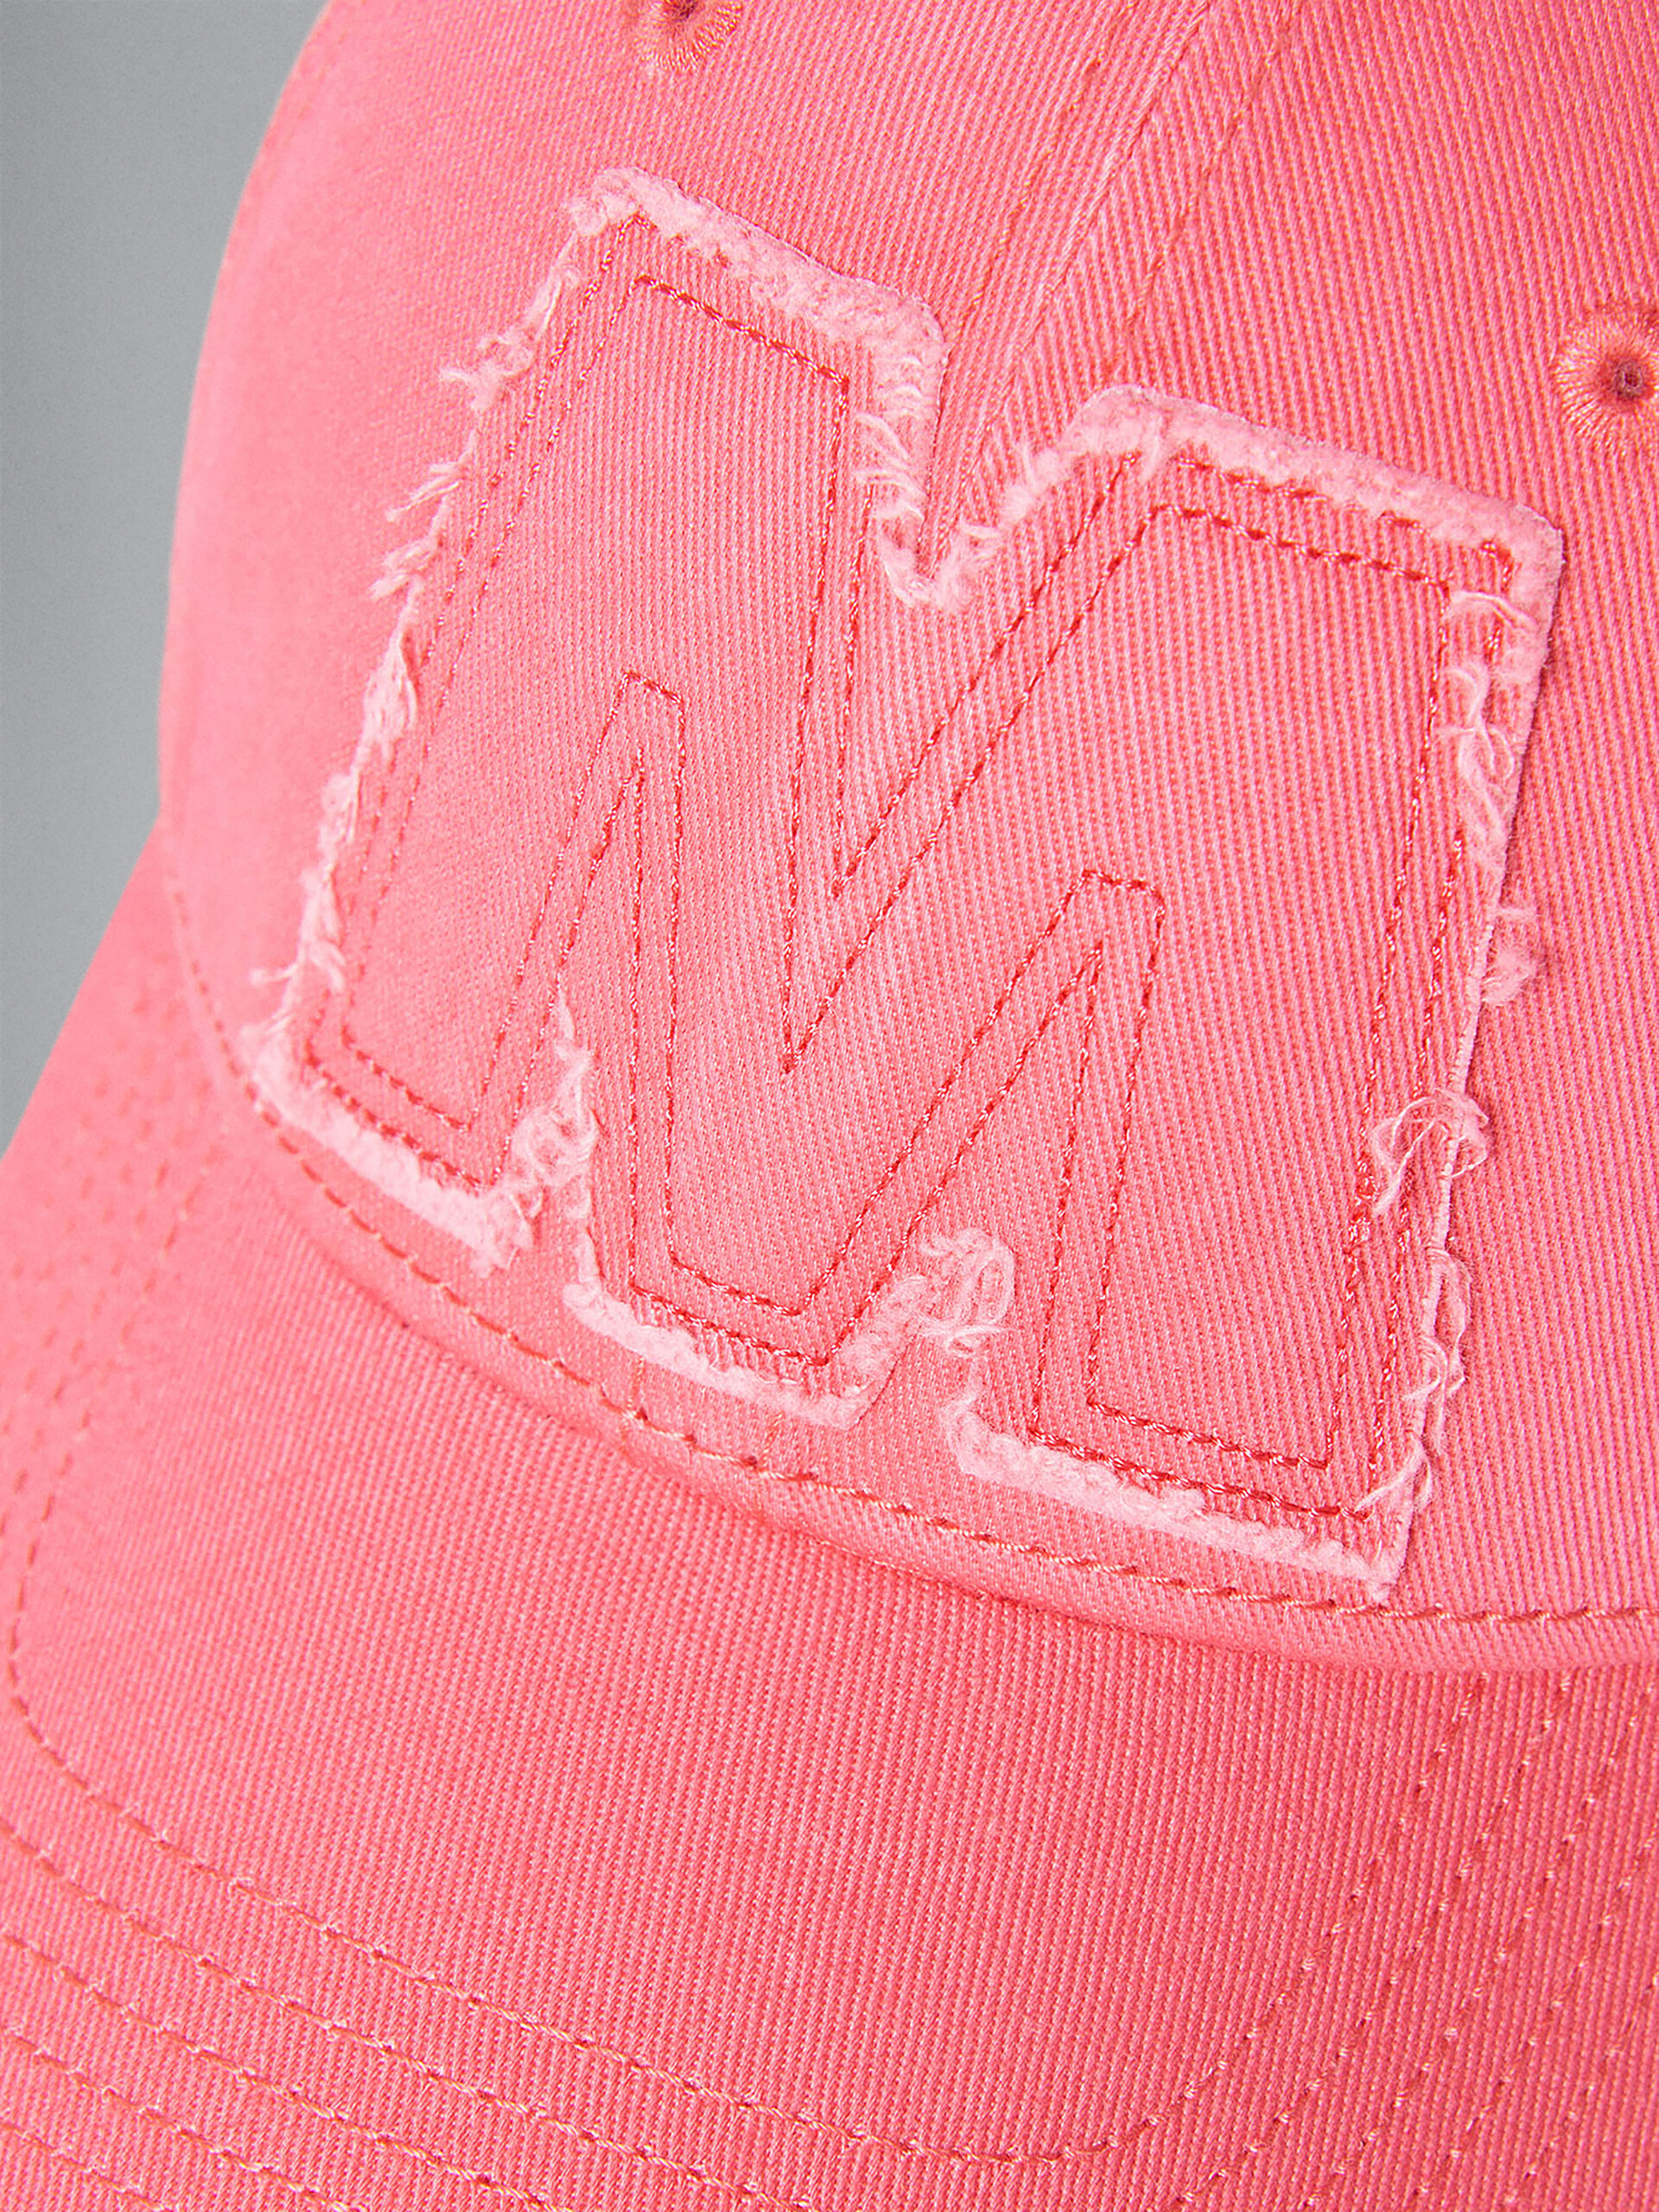 Fuchsia baseball cap with Big M logo - Caps - Image 3